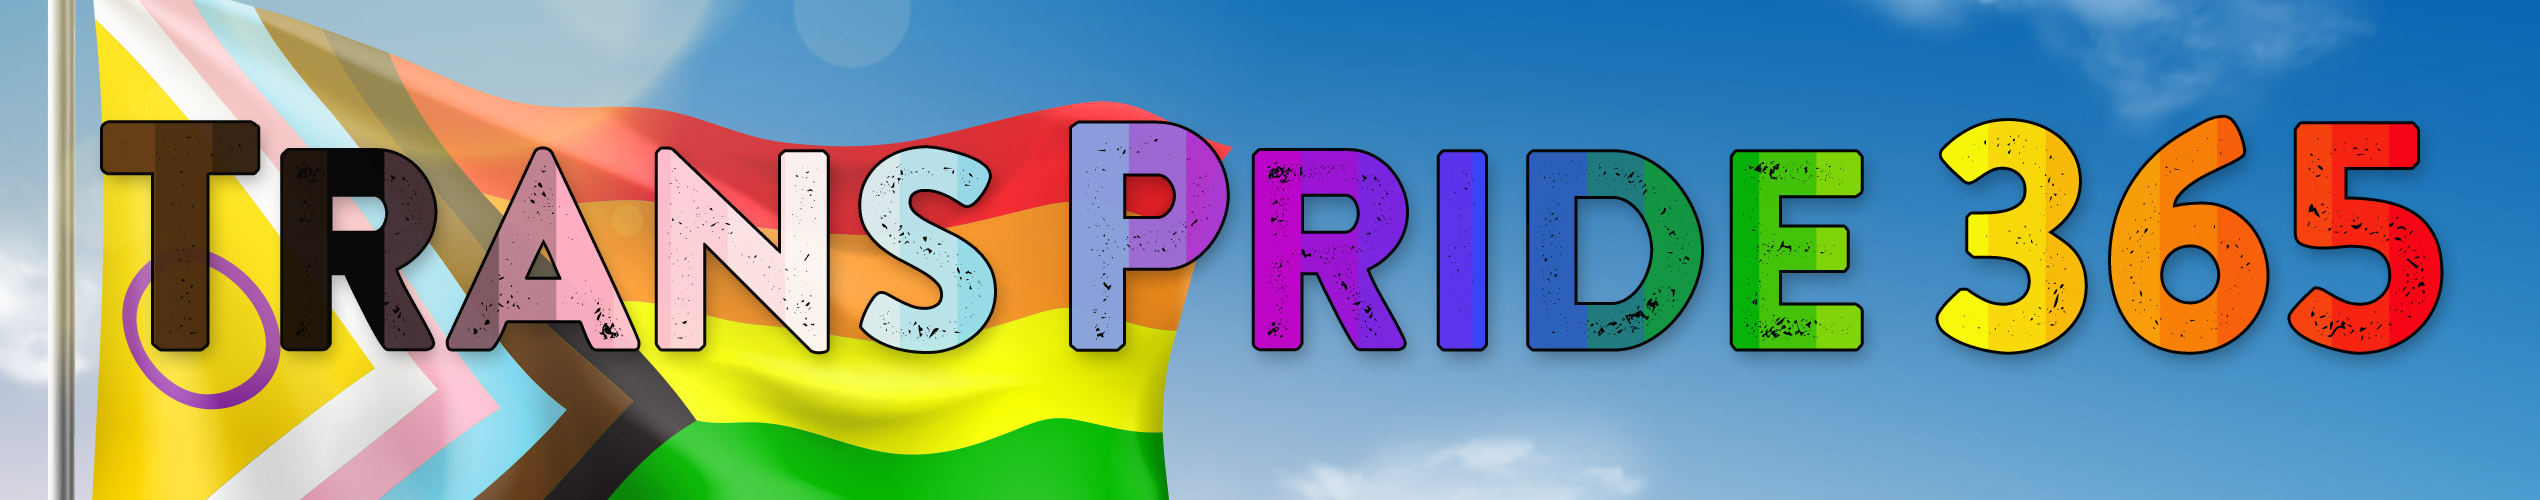 Trans Pride 365